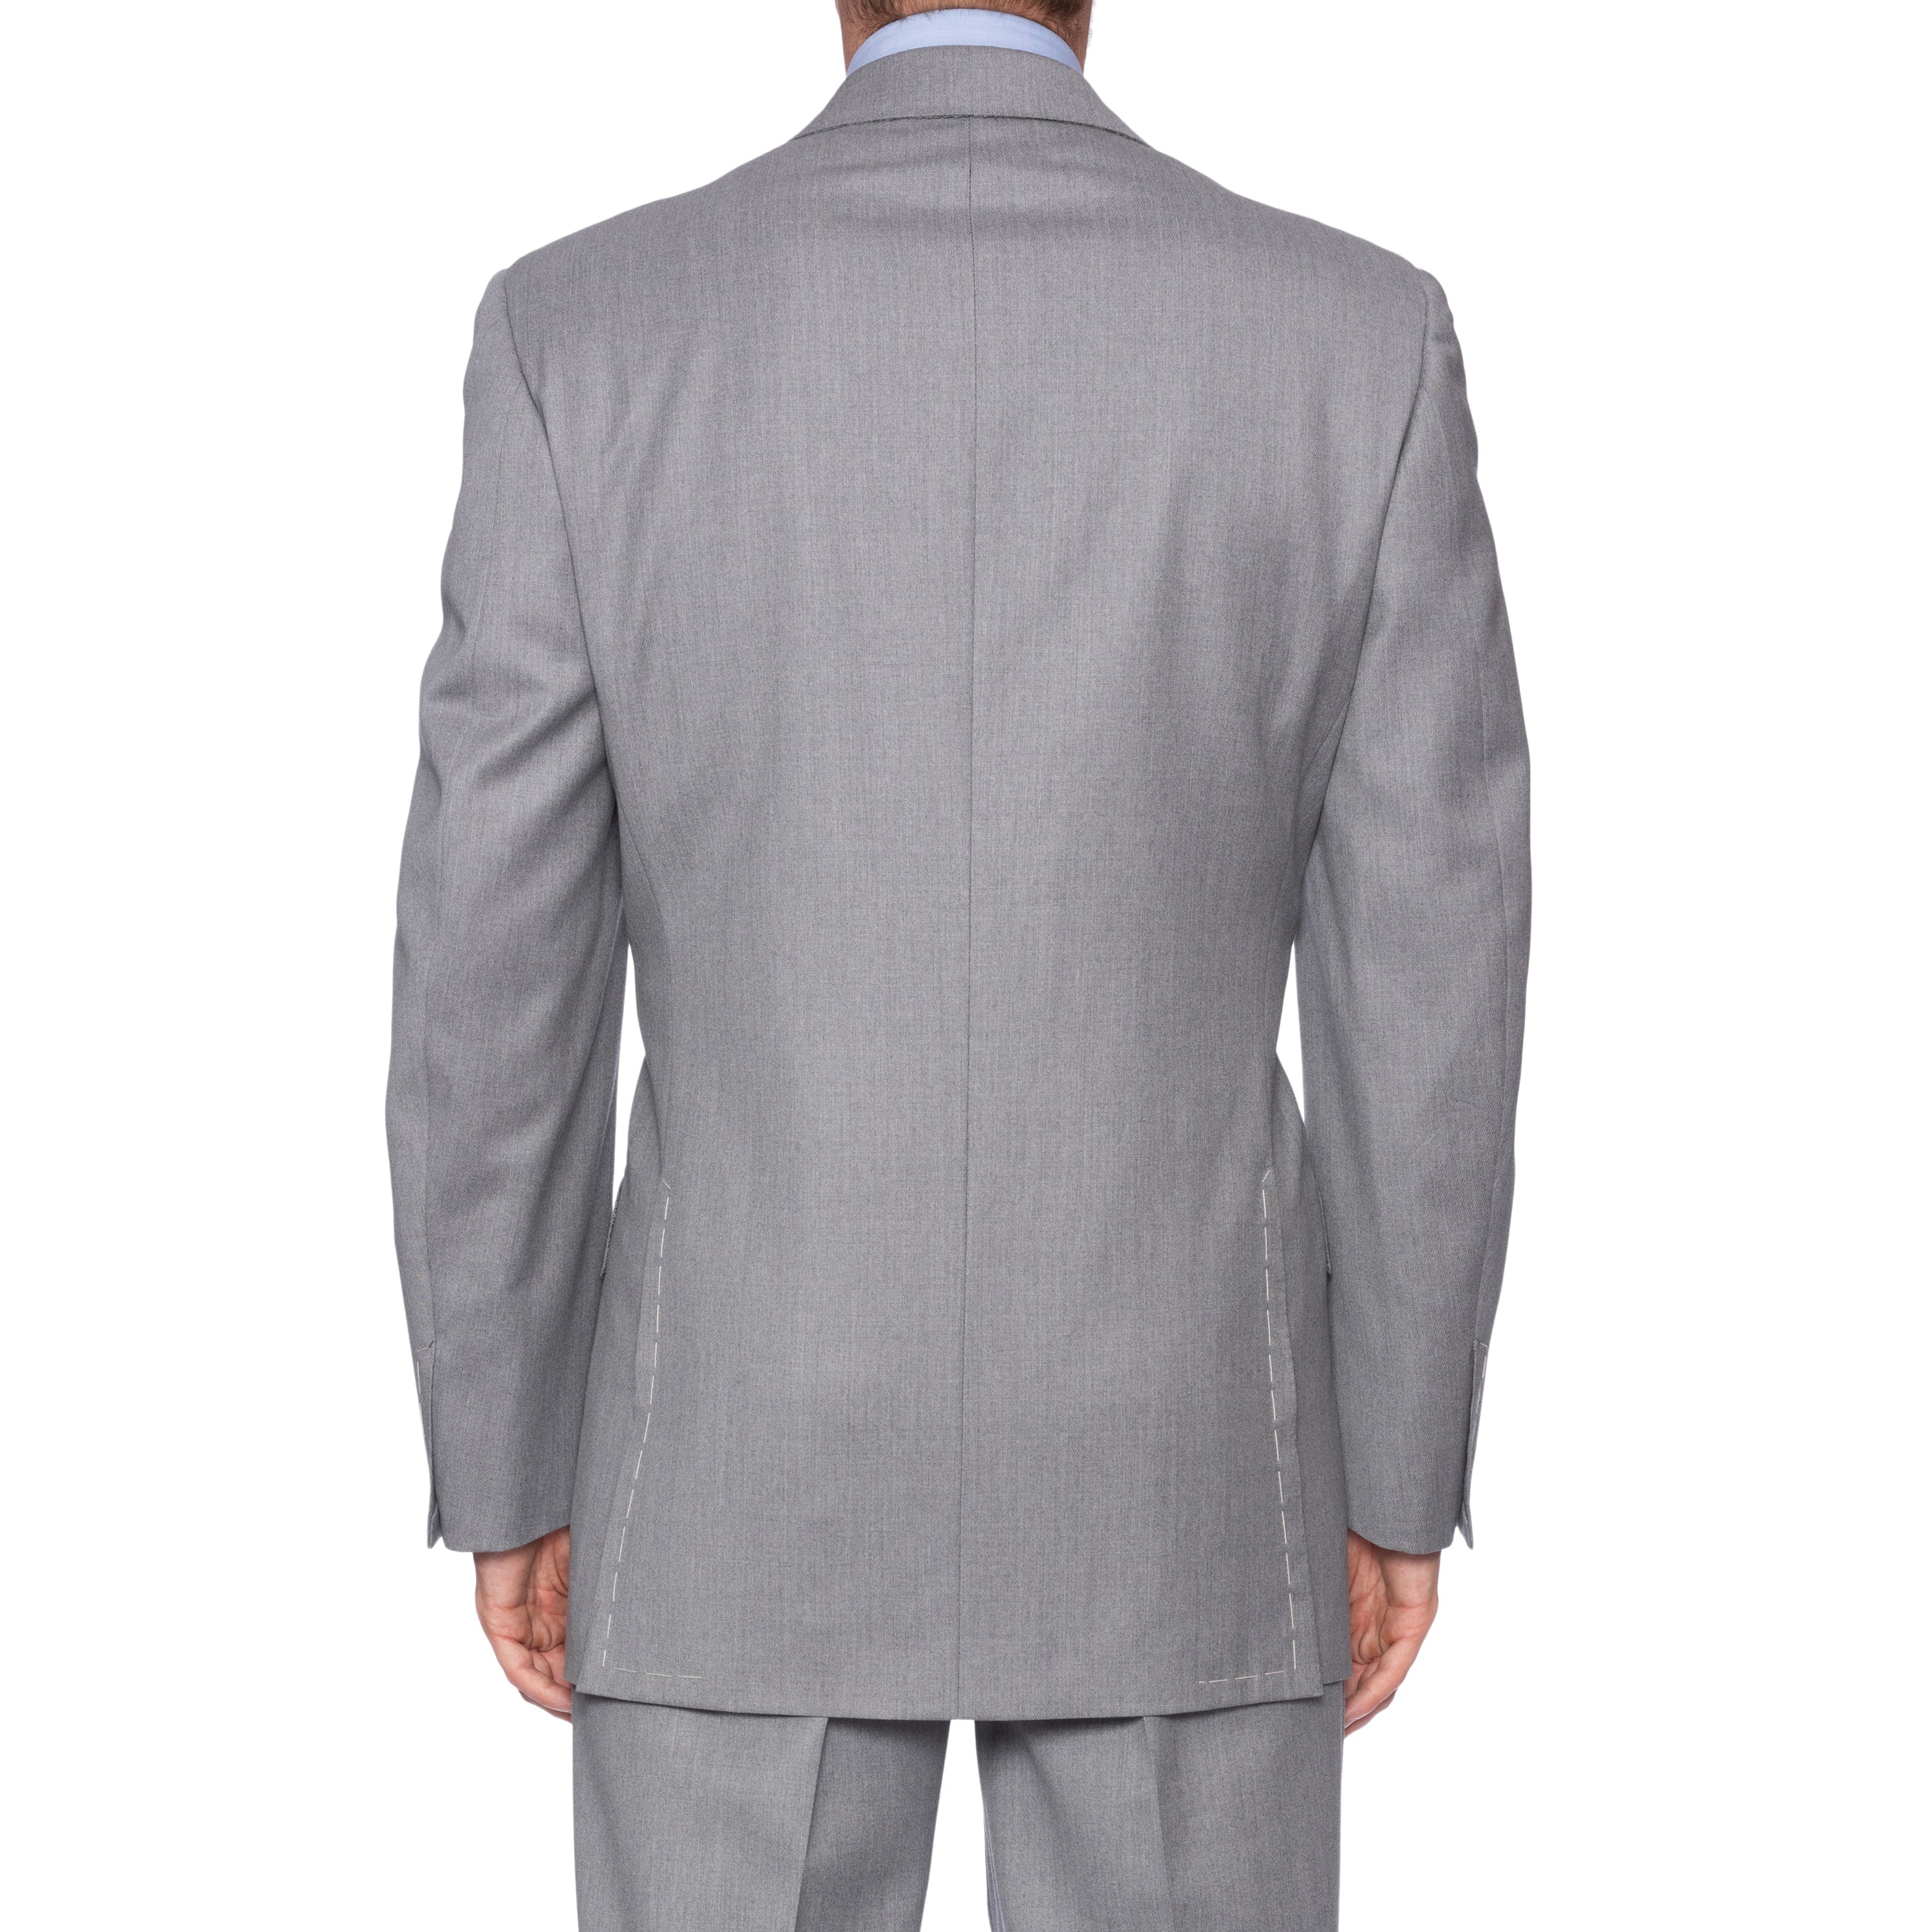 CASTANGIA 1850 Gray Twill Wool Super 120's Suit EU 52 L NEW US 42 Long CASTANGIA